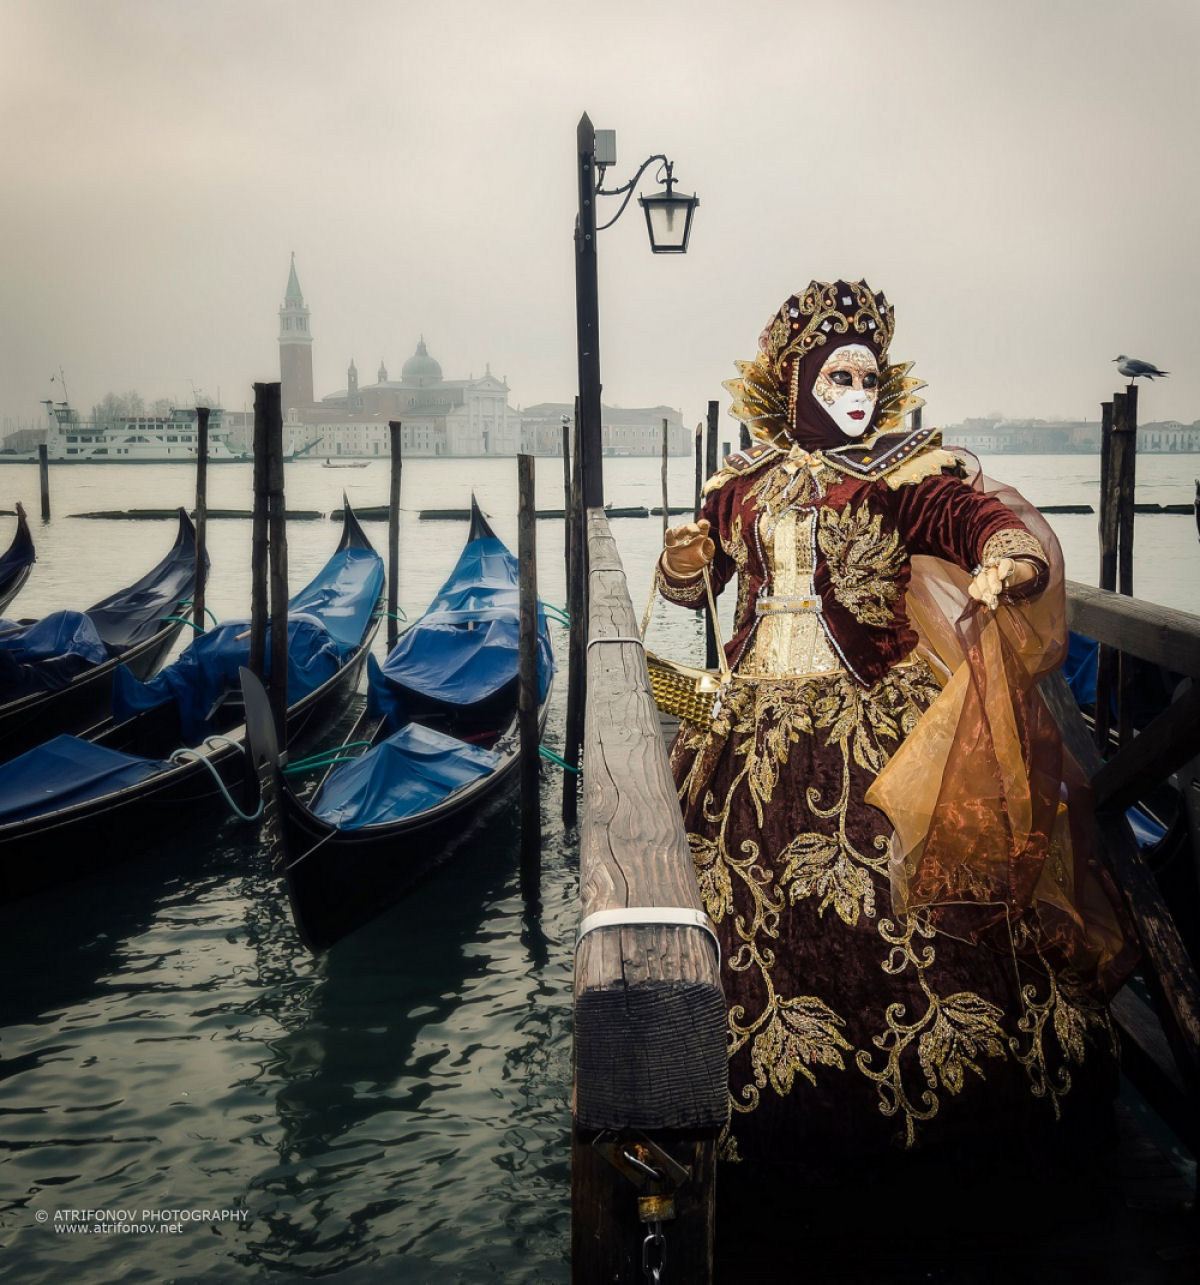 24 fotos absolutamente fascinantes do carnaval de Veneza 17